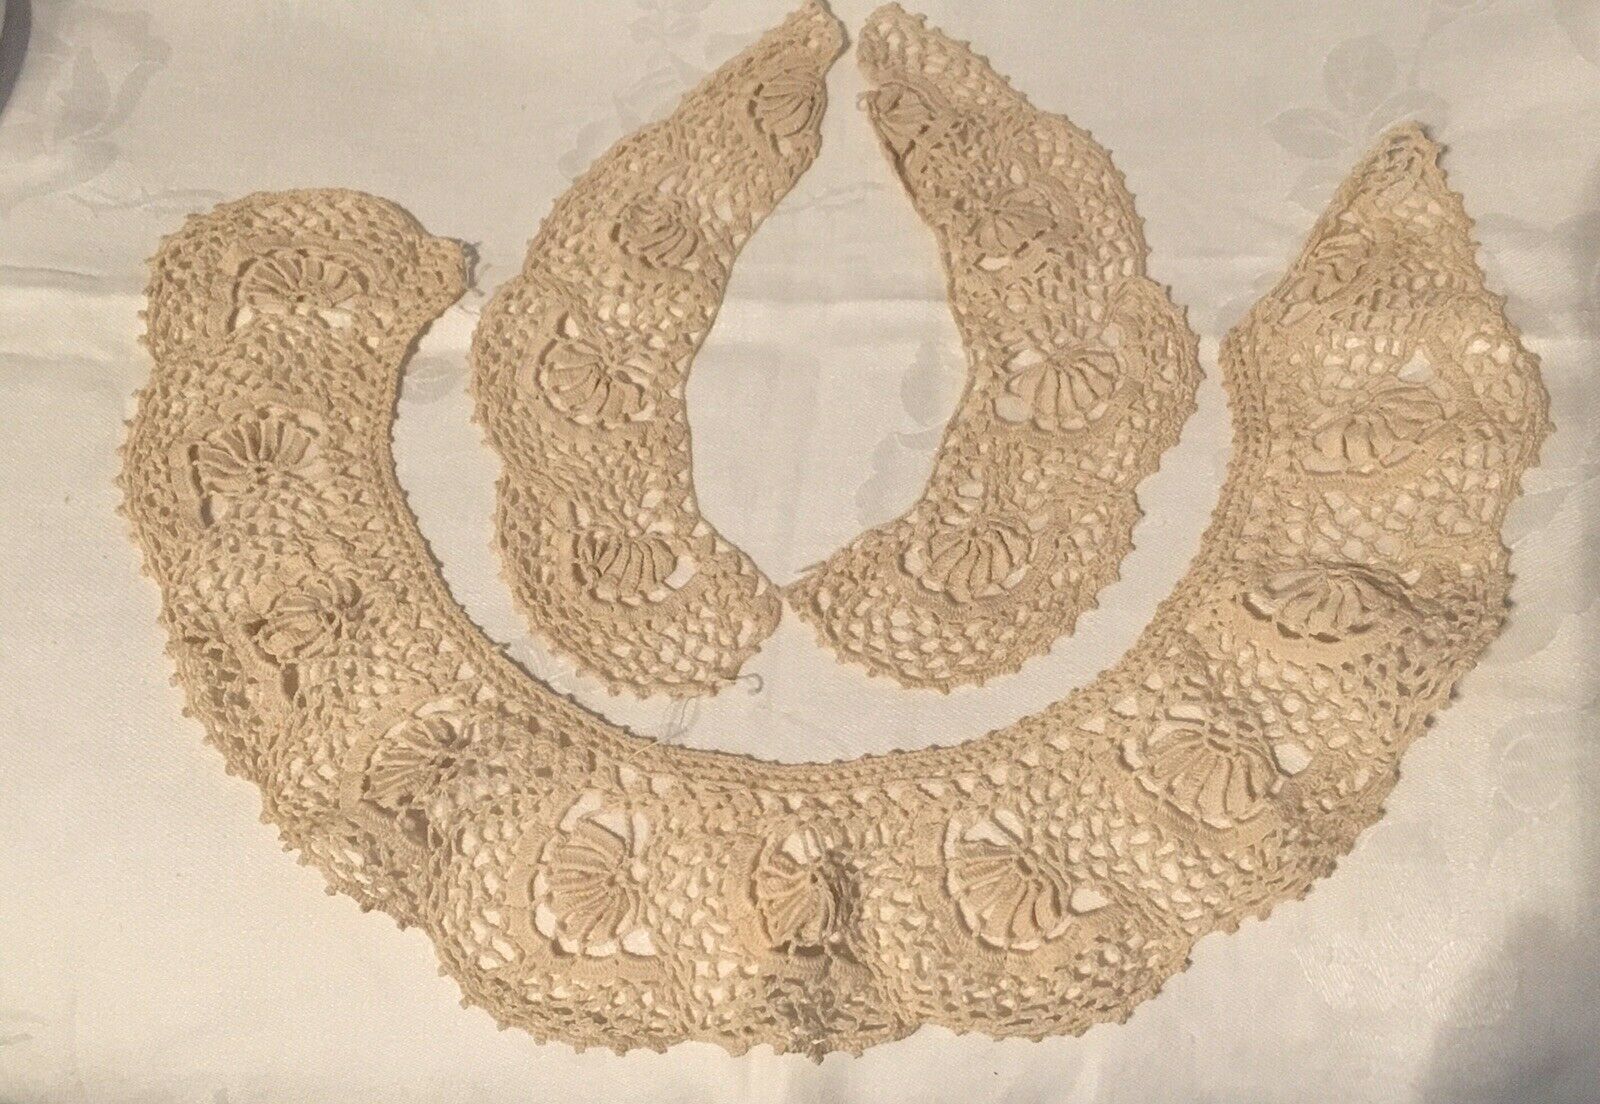 2  Vintage Crocheted Collars - 1920’s